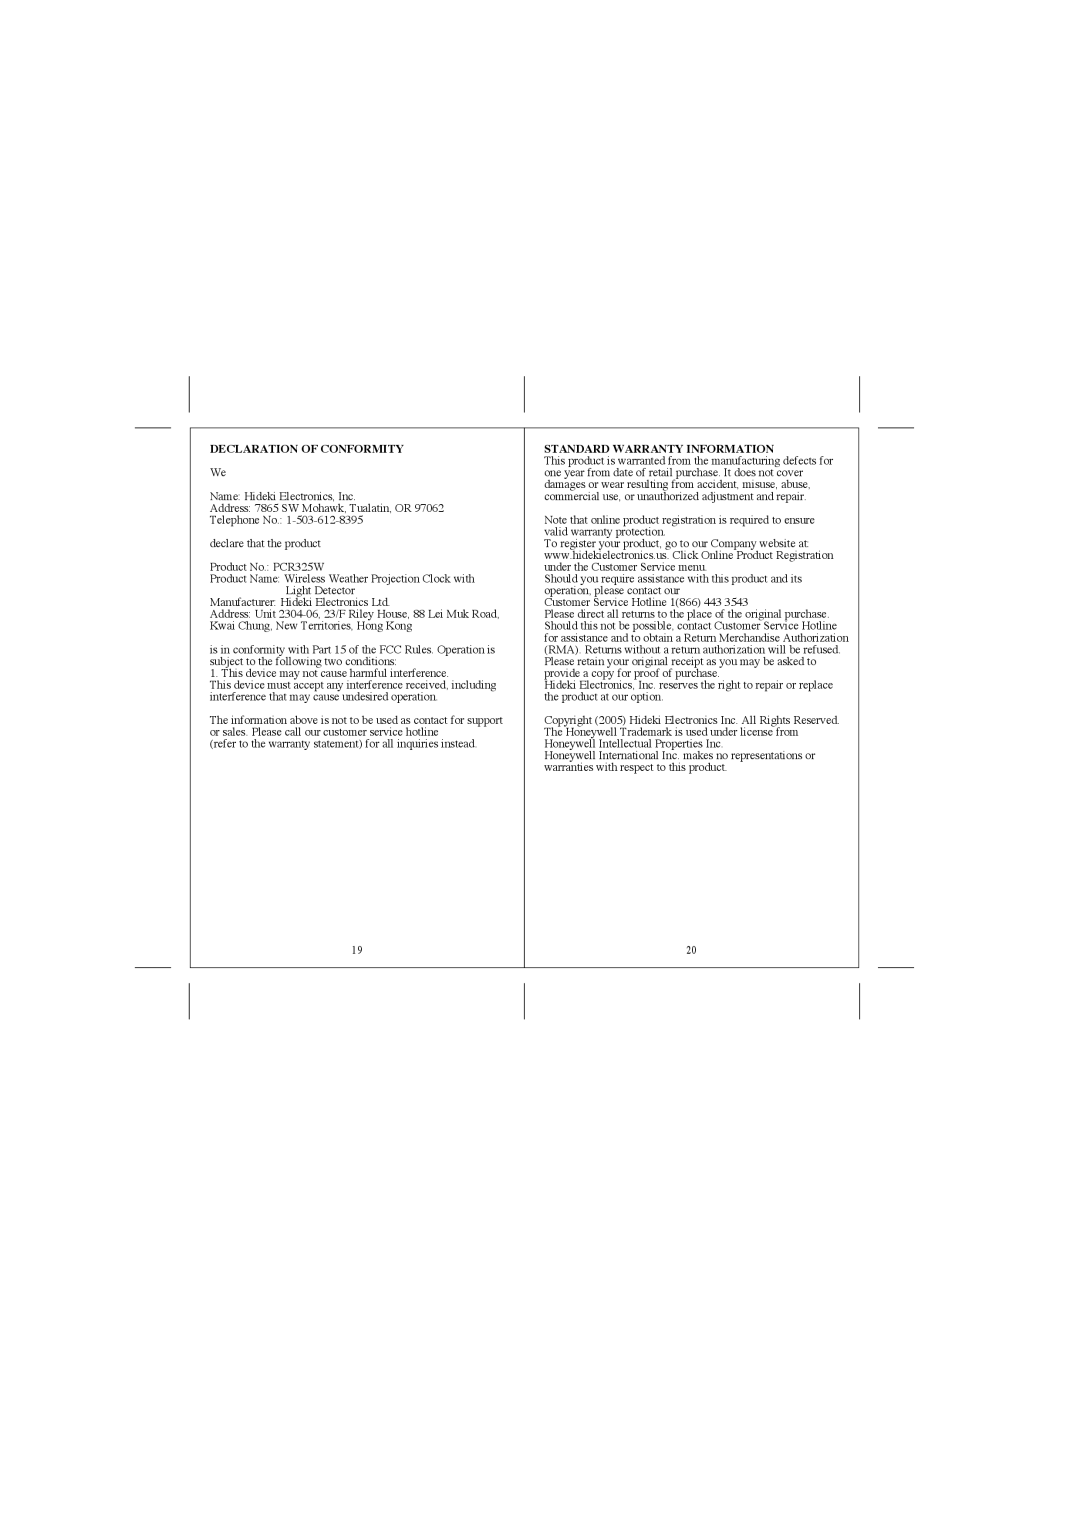 Honeywell PCR325W manual Declaration Of Conformity, Standard Warranty Information 